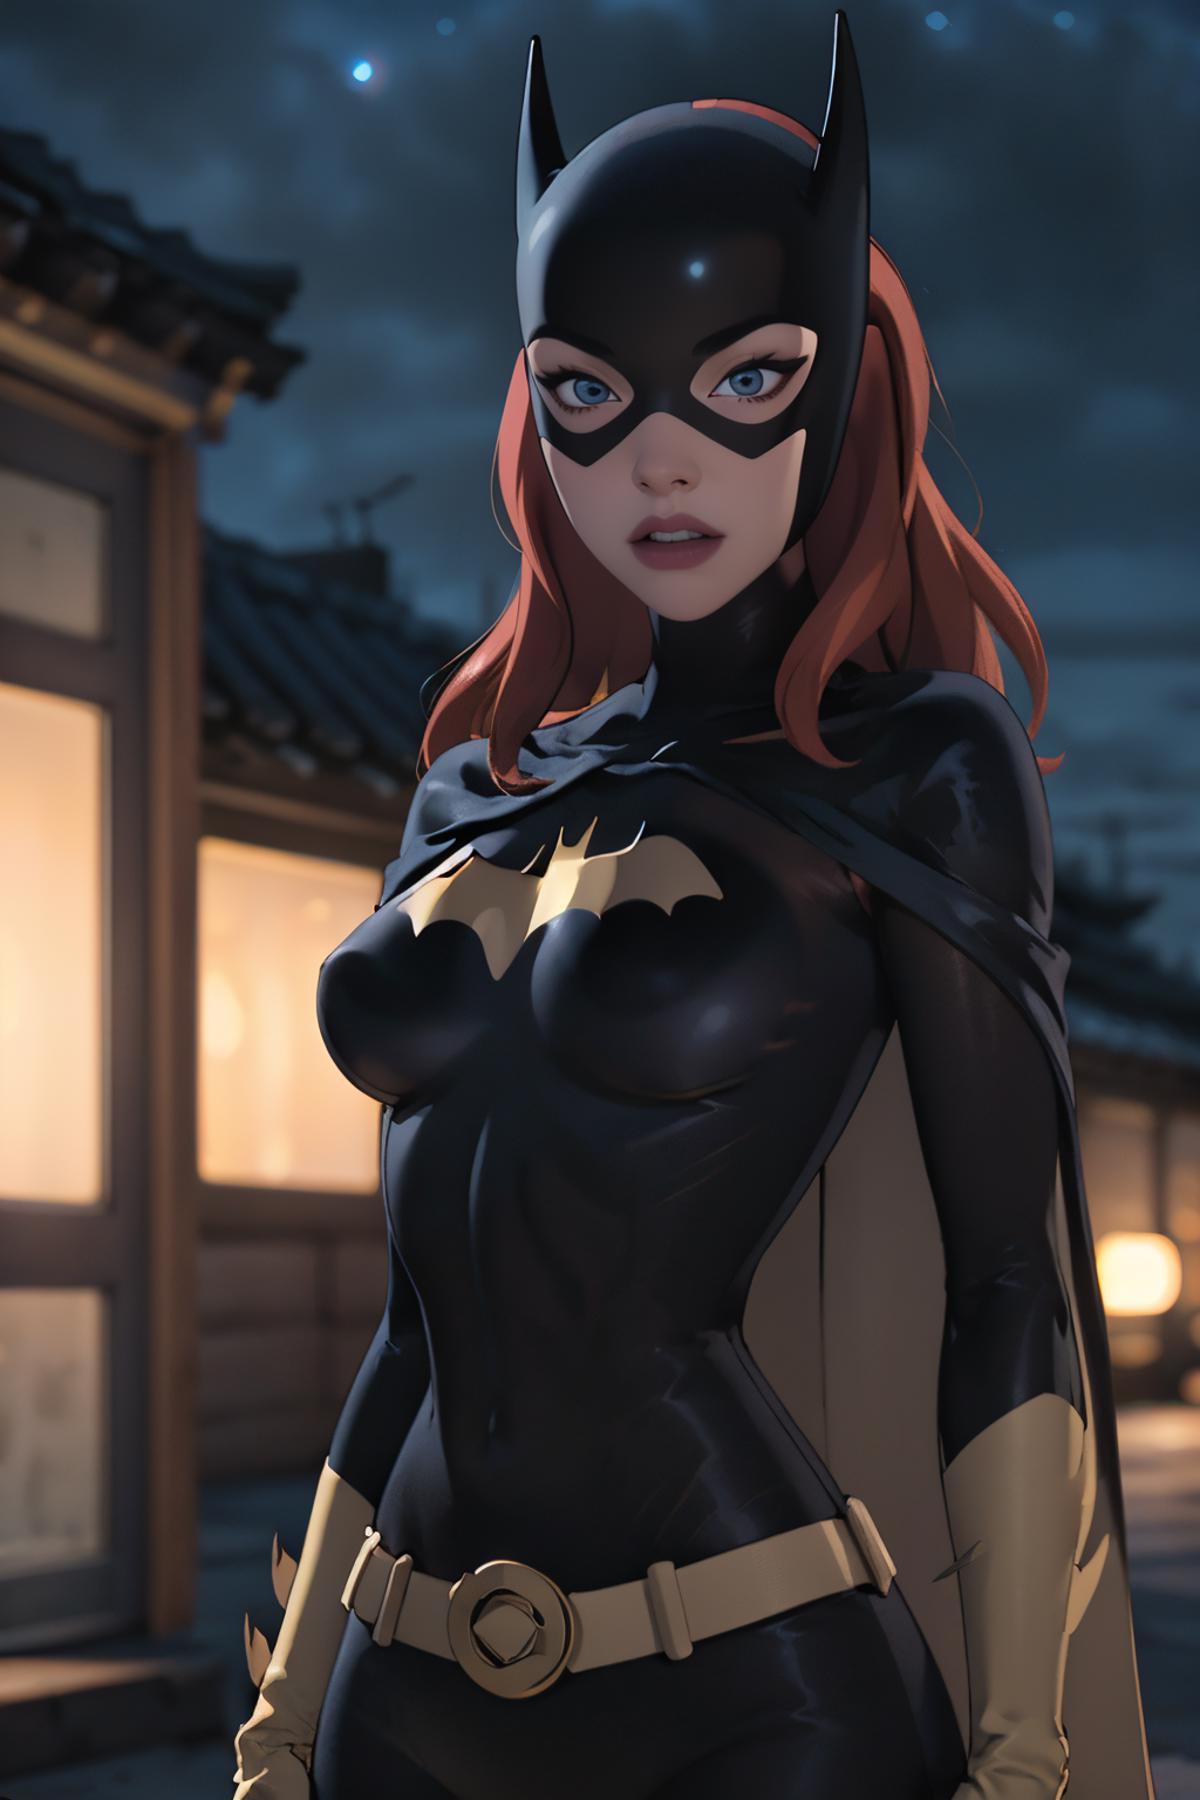 A cartoon image of a female Batman character.